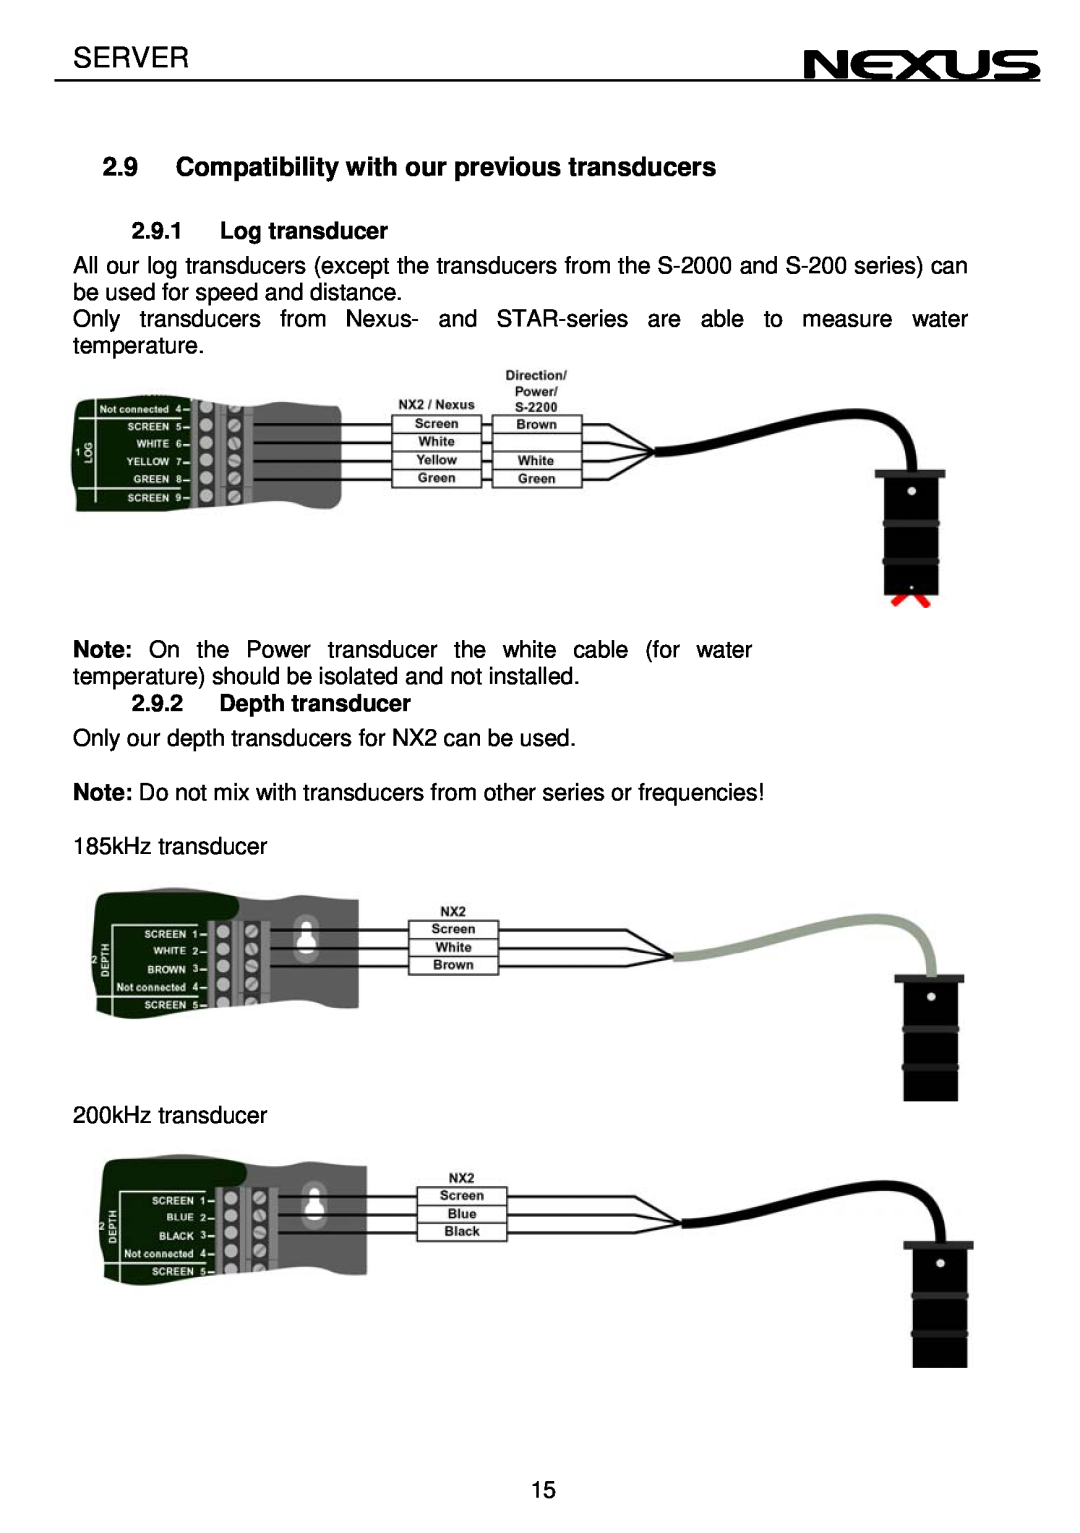 Nexus 21 NX2 operation manual Compatibility with our previous transducers, Server, Log transducer, Depth transducer 